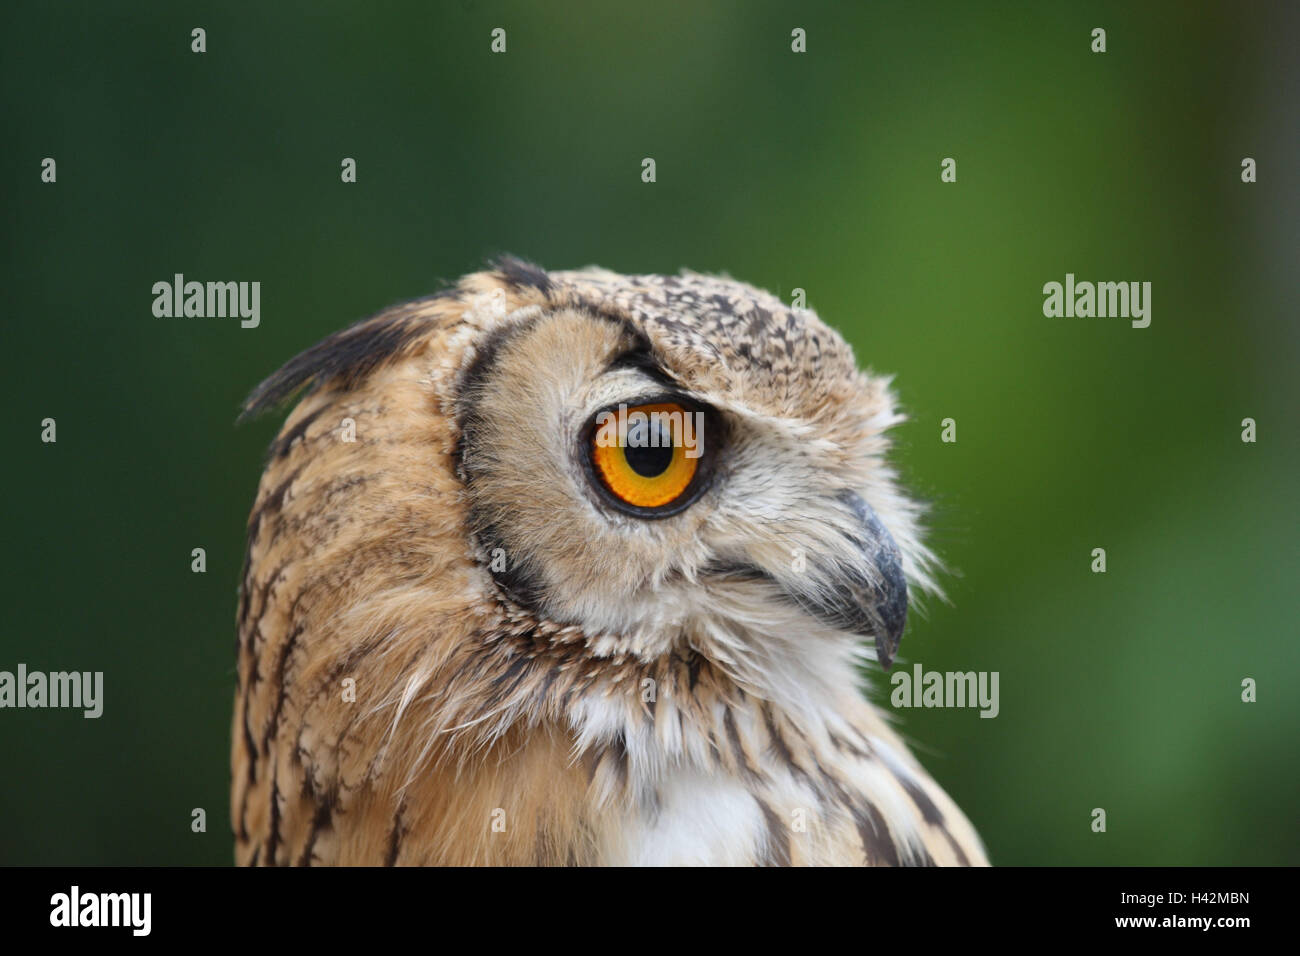 Nepal eagle owl, portrait, side view, Stock Photo